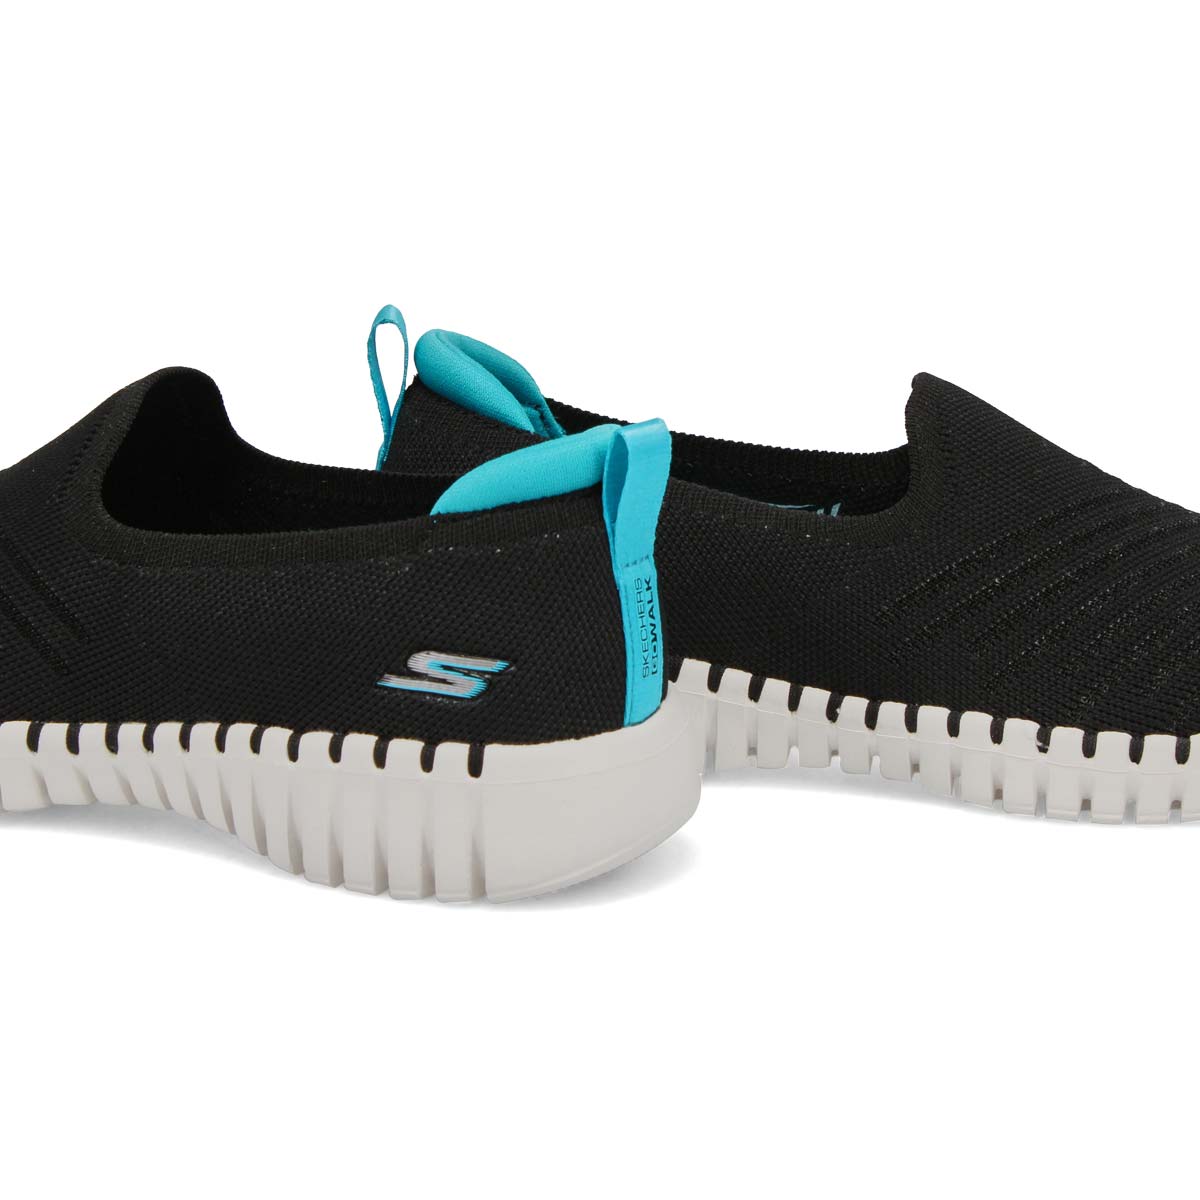 Women's Go Walk Smart shoes - black/torquoise